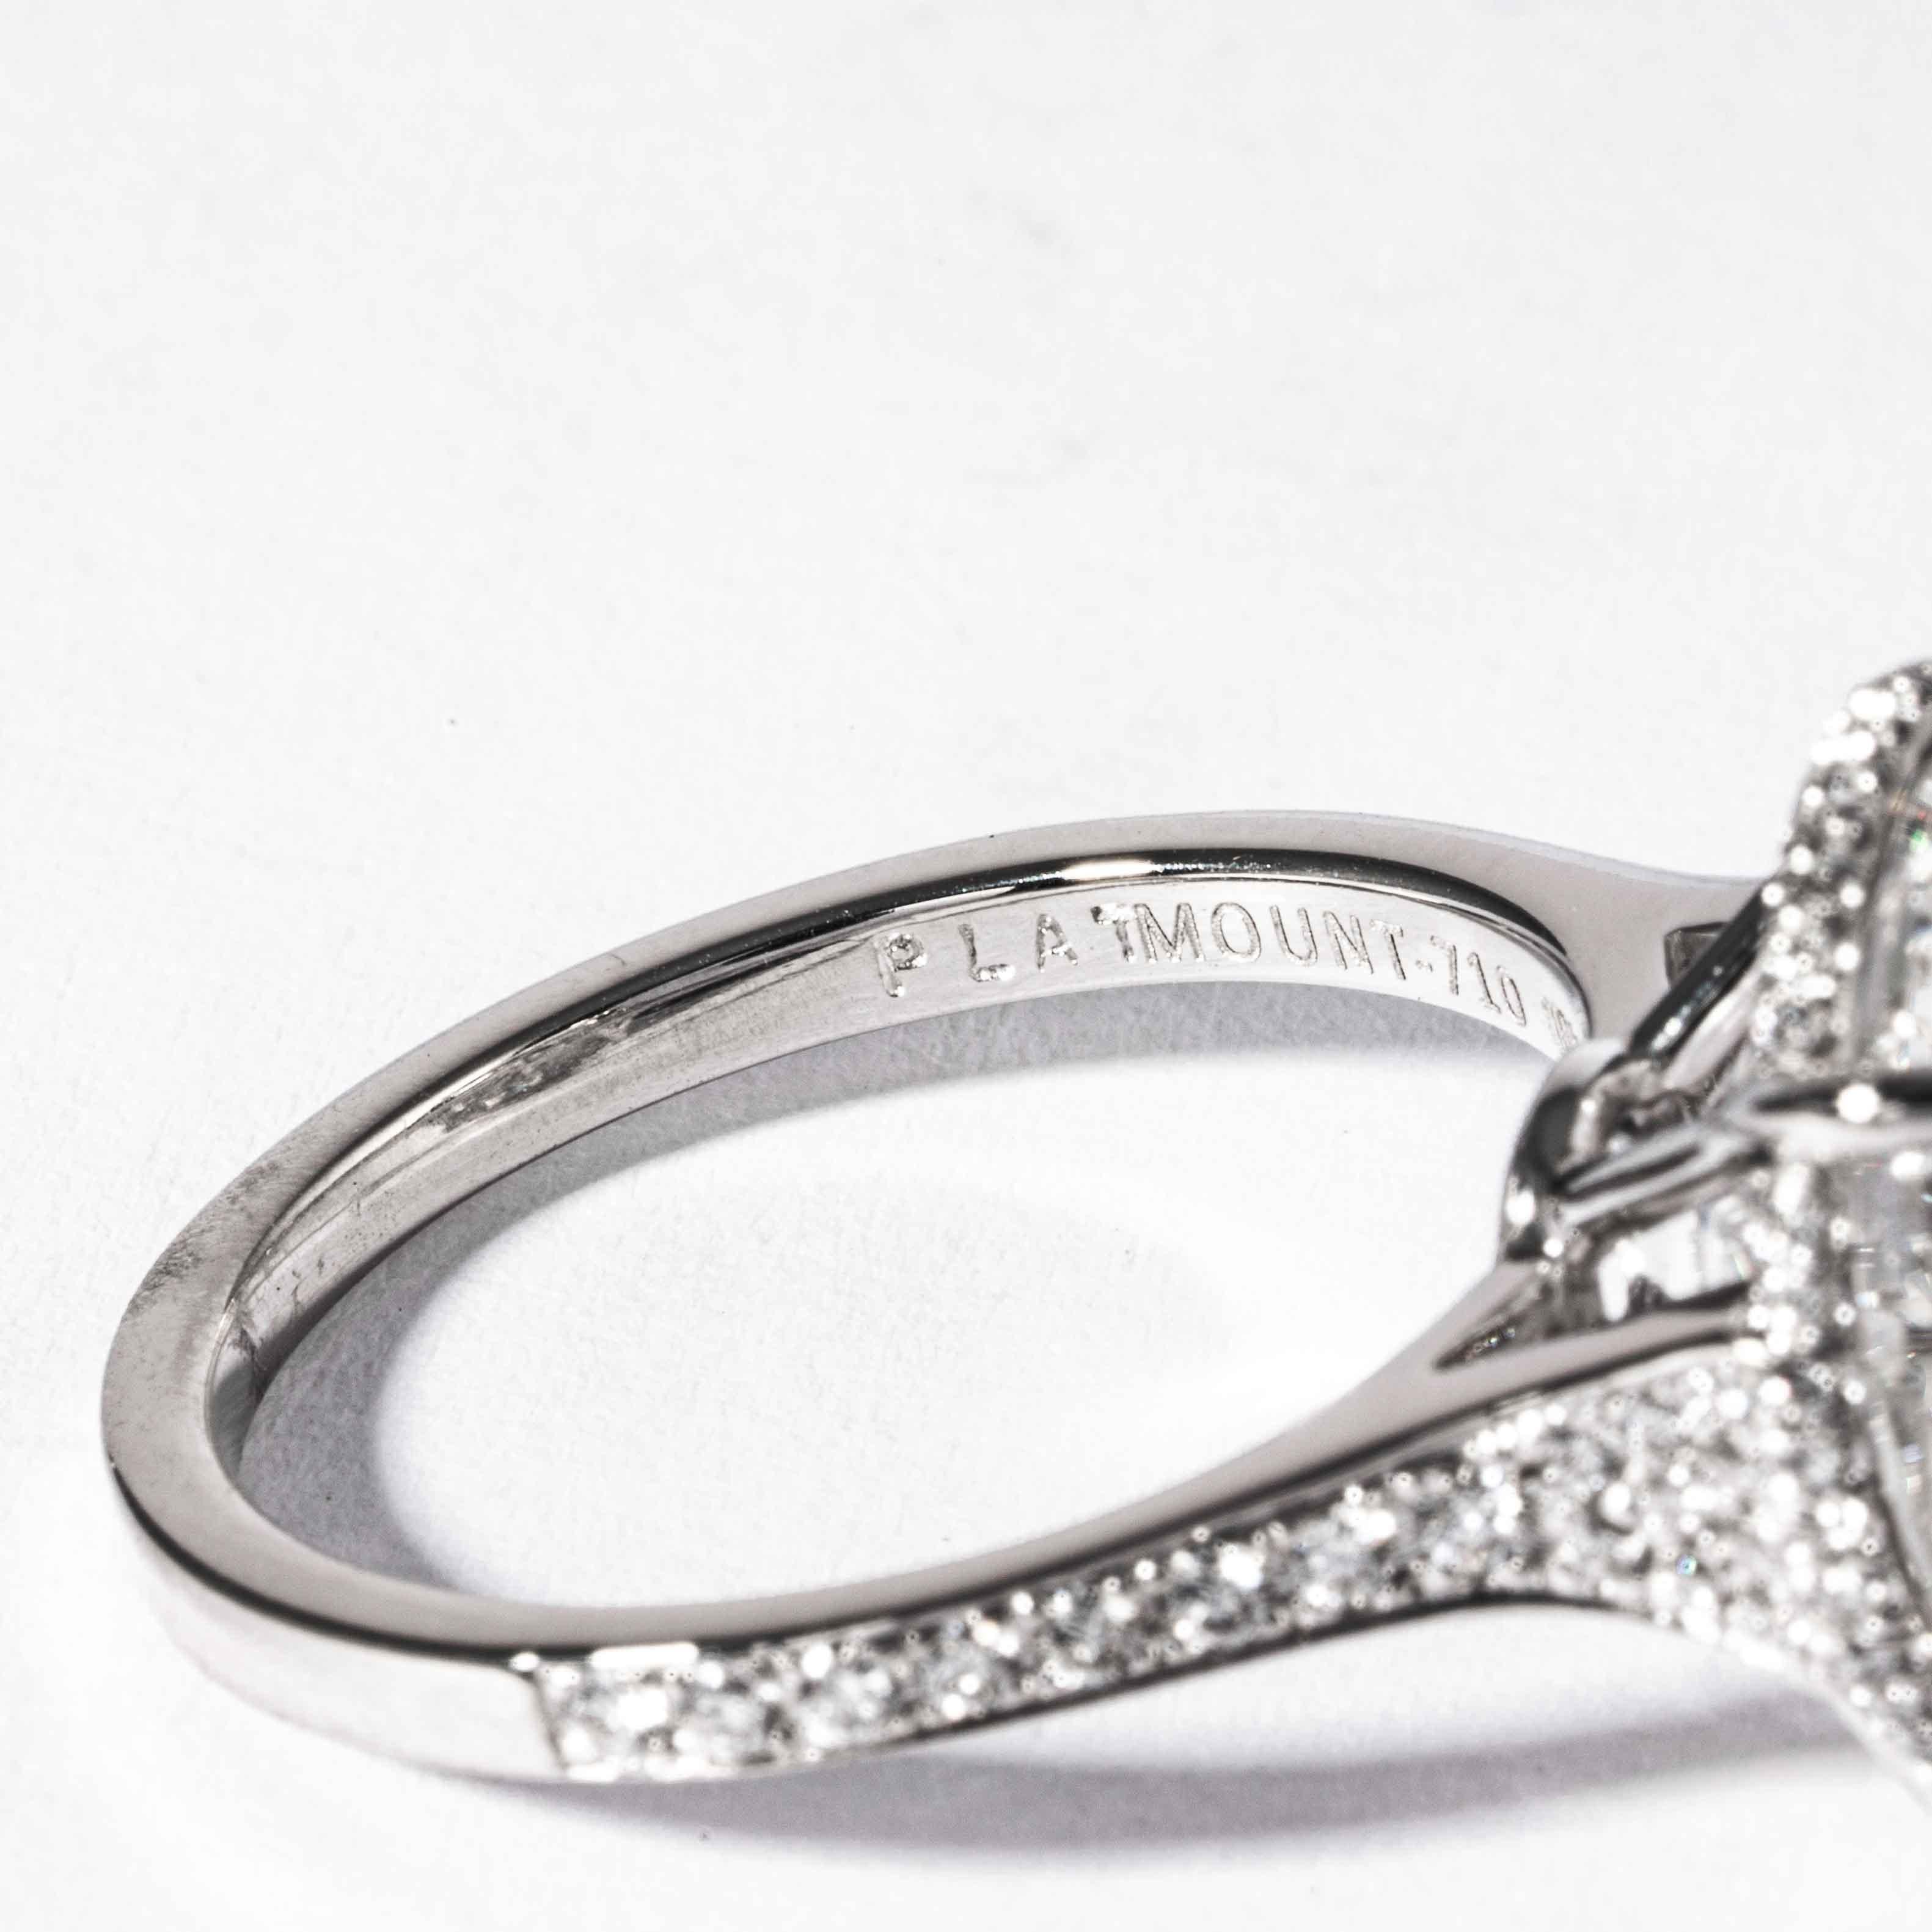 Shreve, Crump & Low GIA Certified 10.77 Carat F VS1 Round Brilliant Diamond Ring For Sale 1